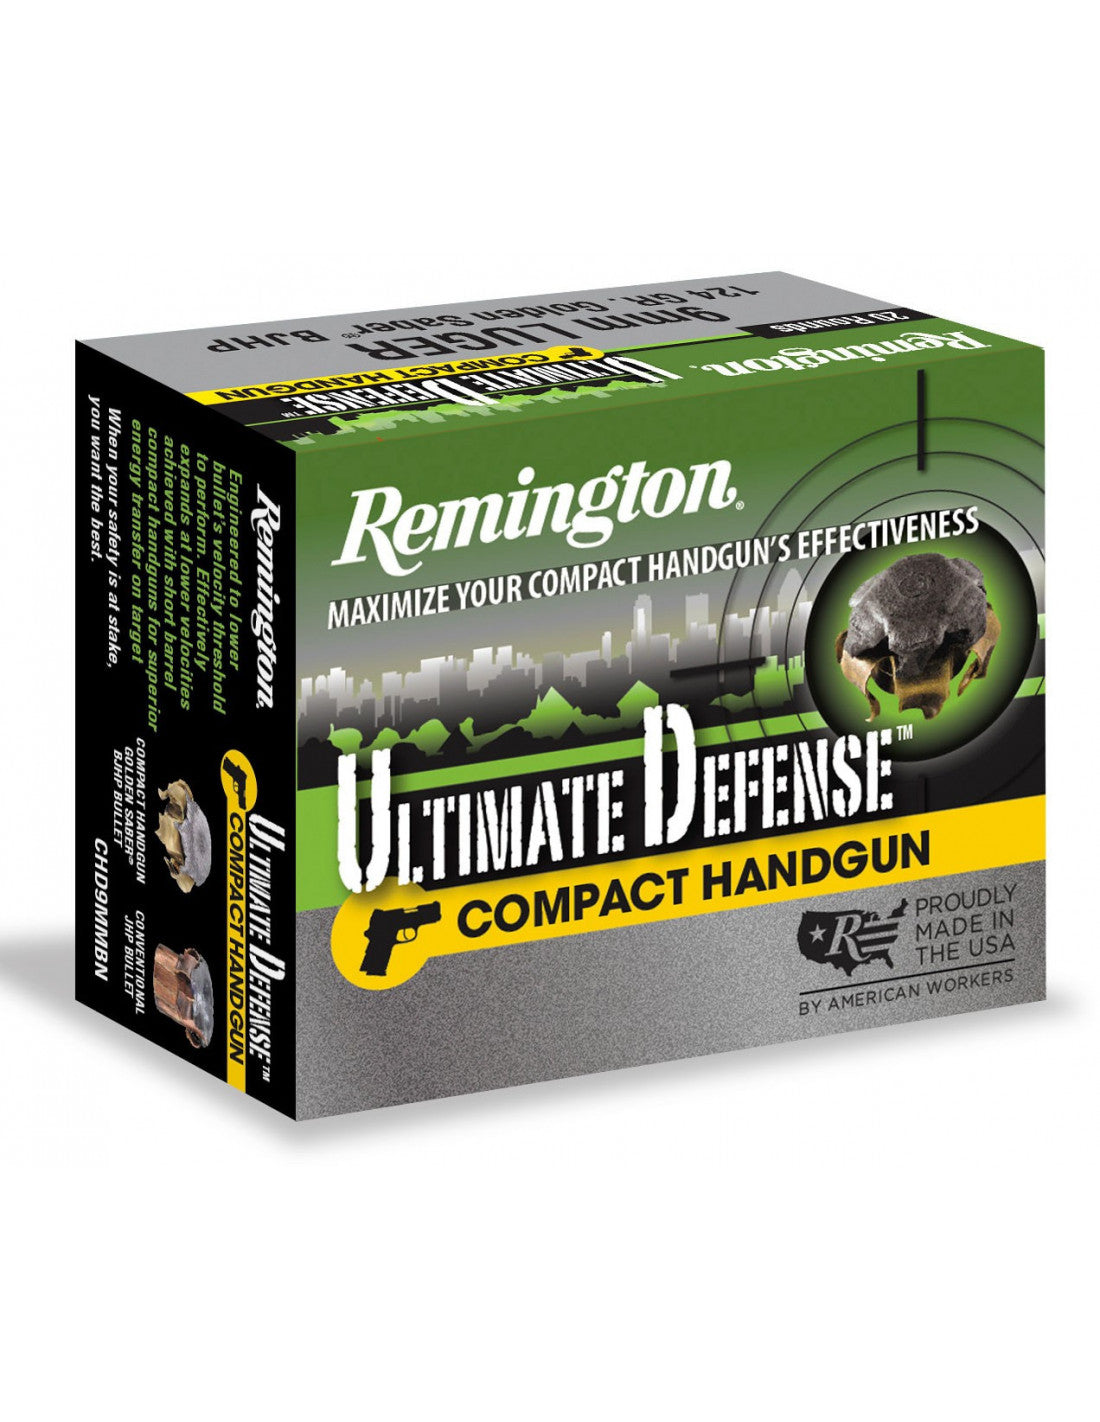 Ultimate Defense Compact Handgun Bullets